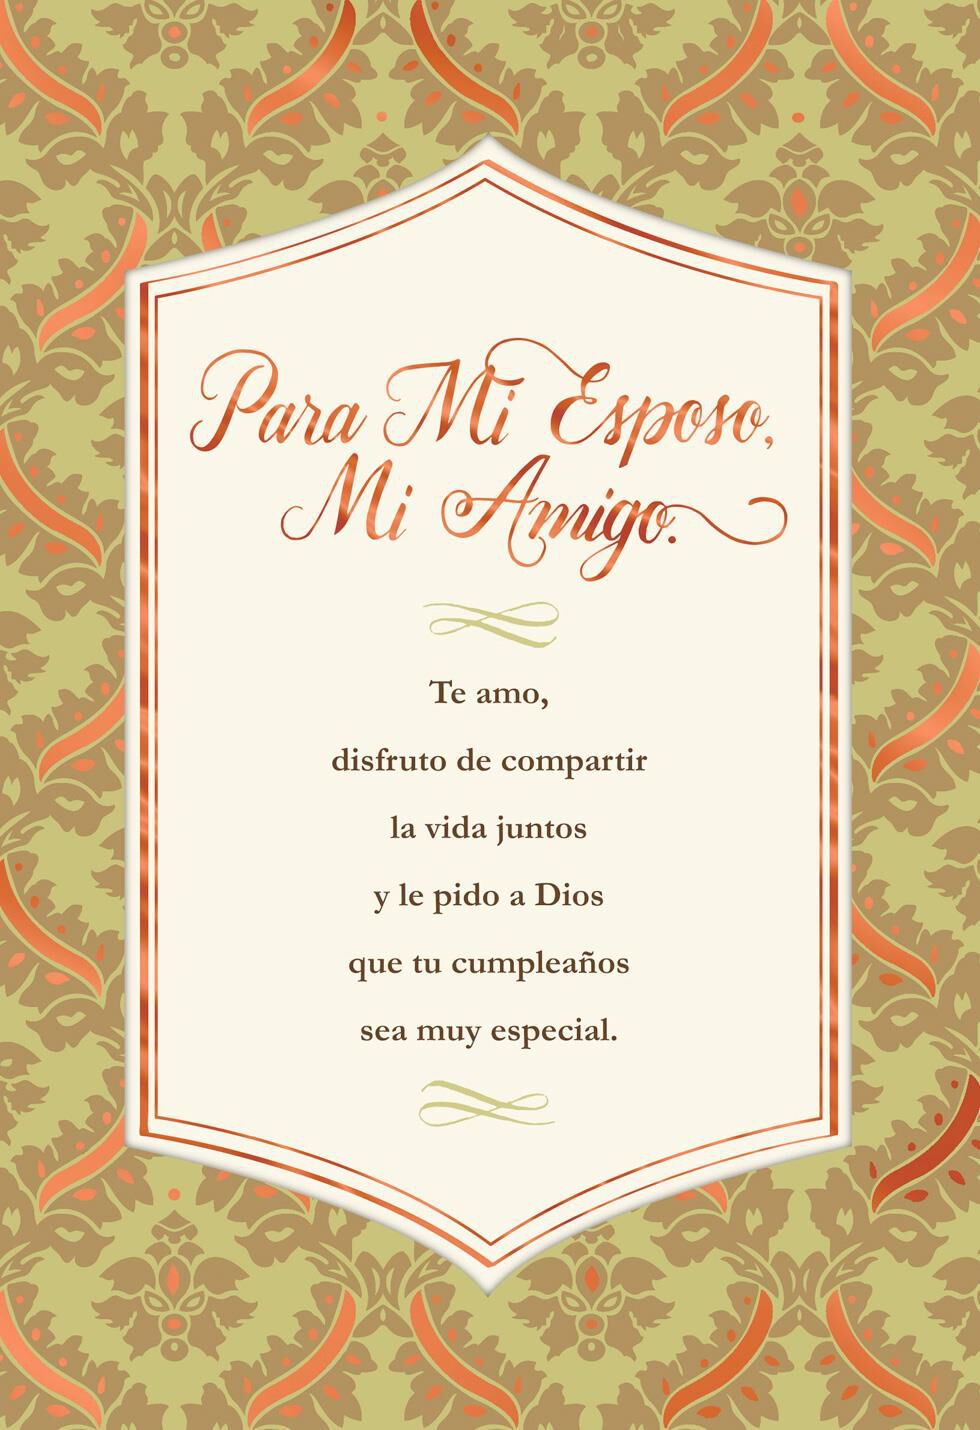 Husband and Friend Spanish-Language Religious Birthday Card - Greeting